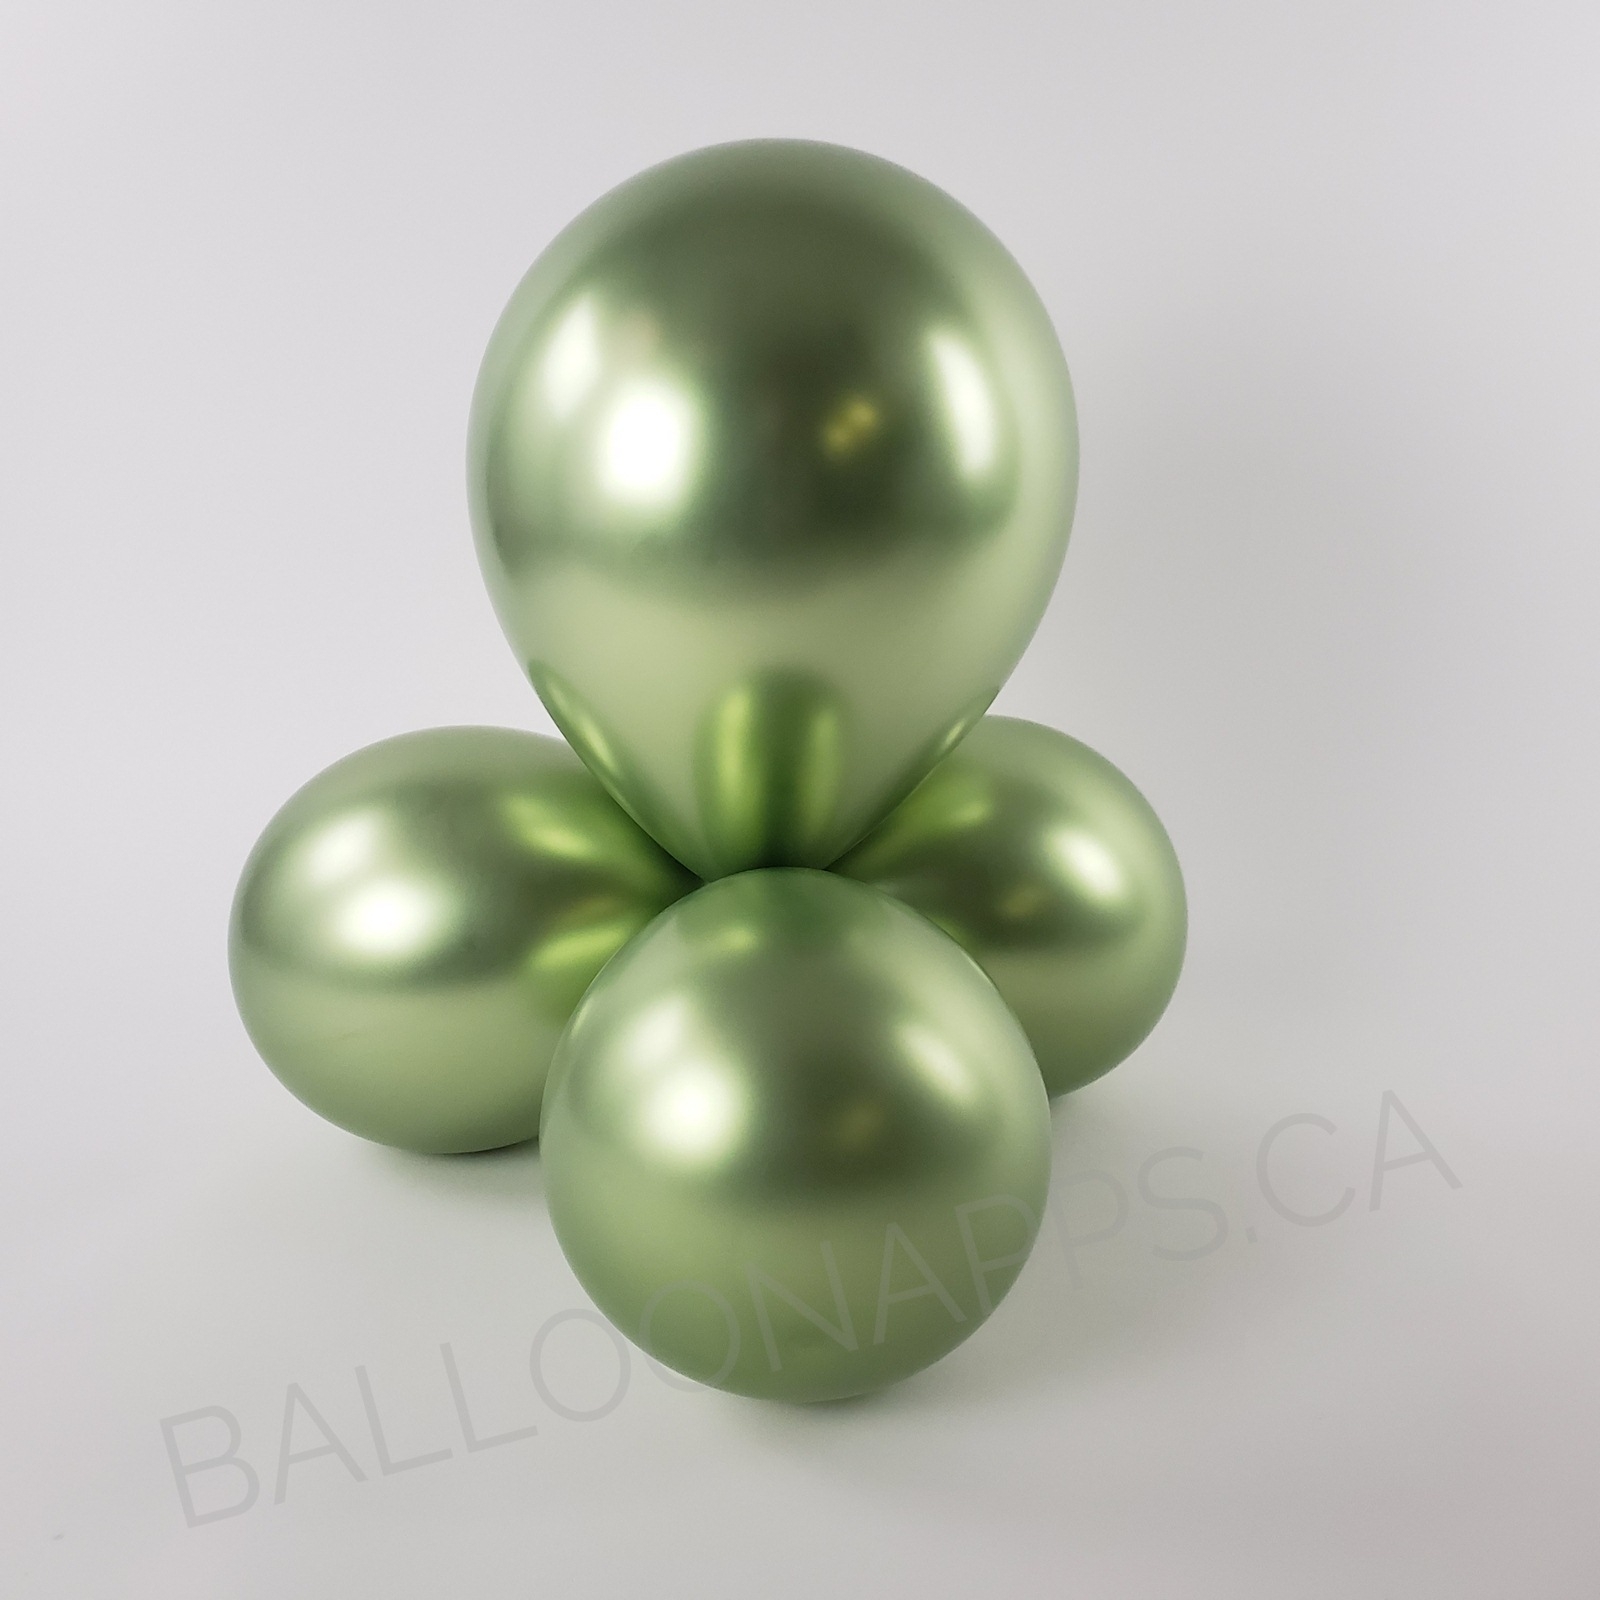 balloon texture BET (50) 260 Reflex Key Lime Green balloons